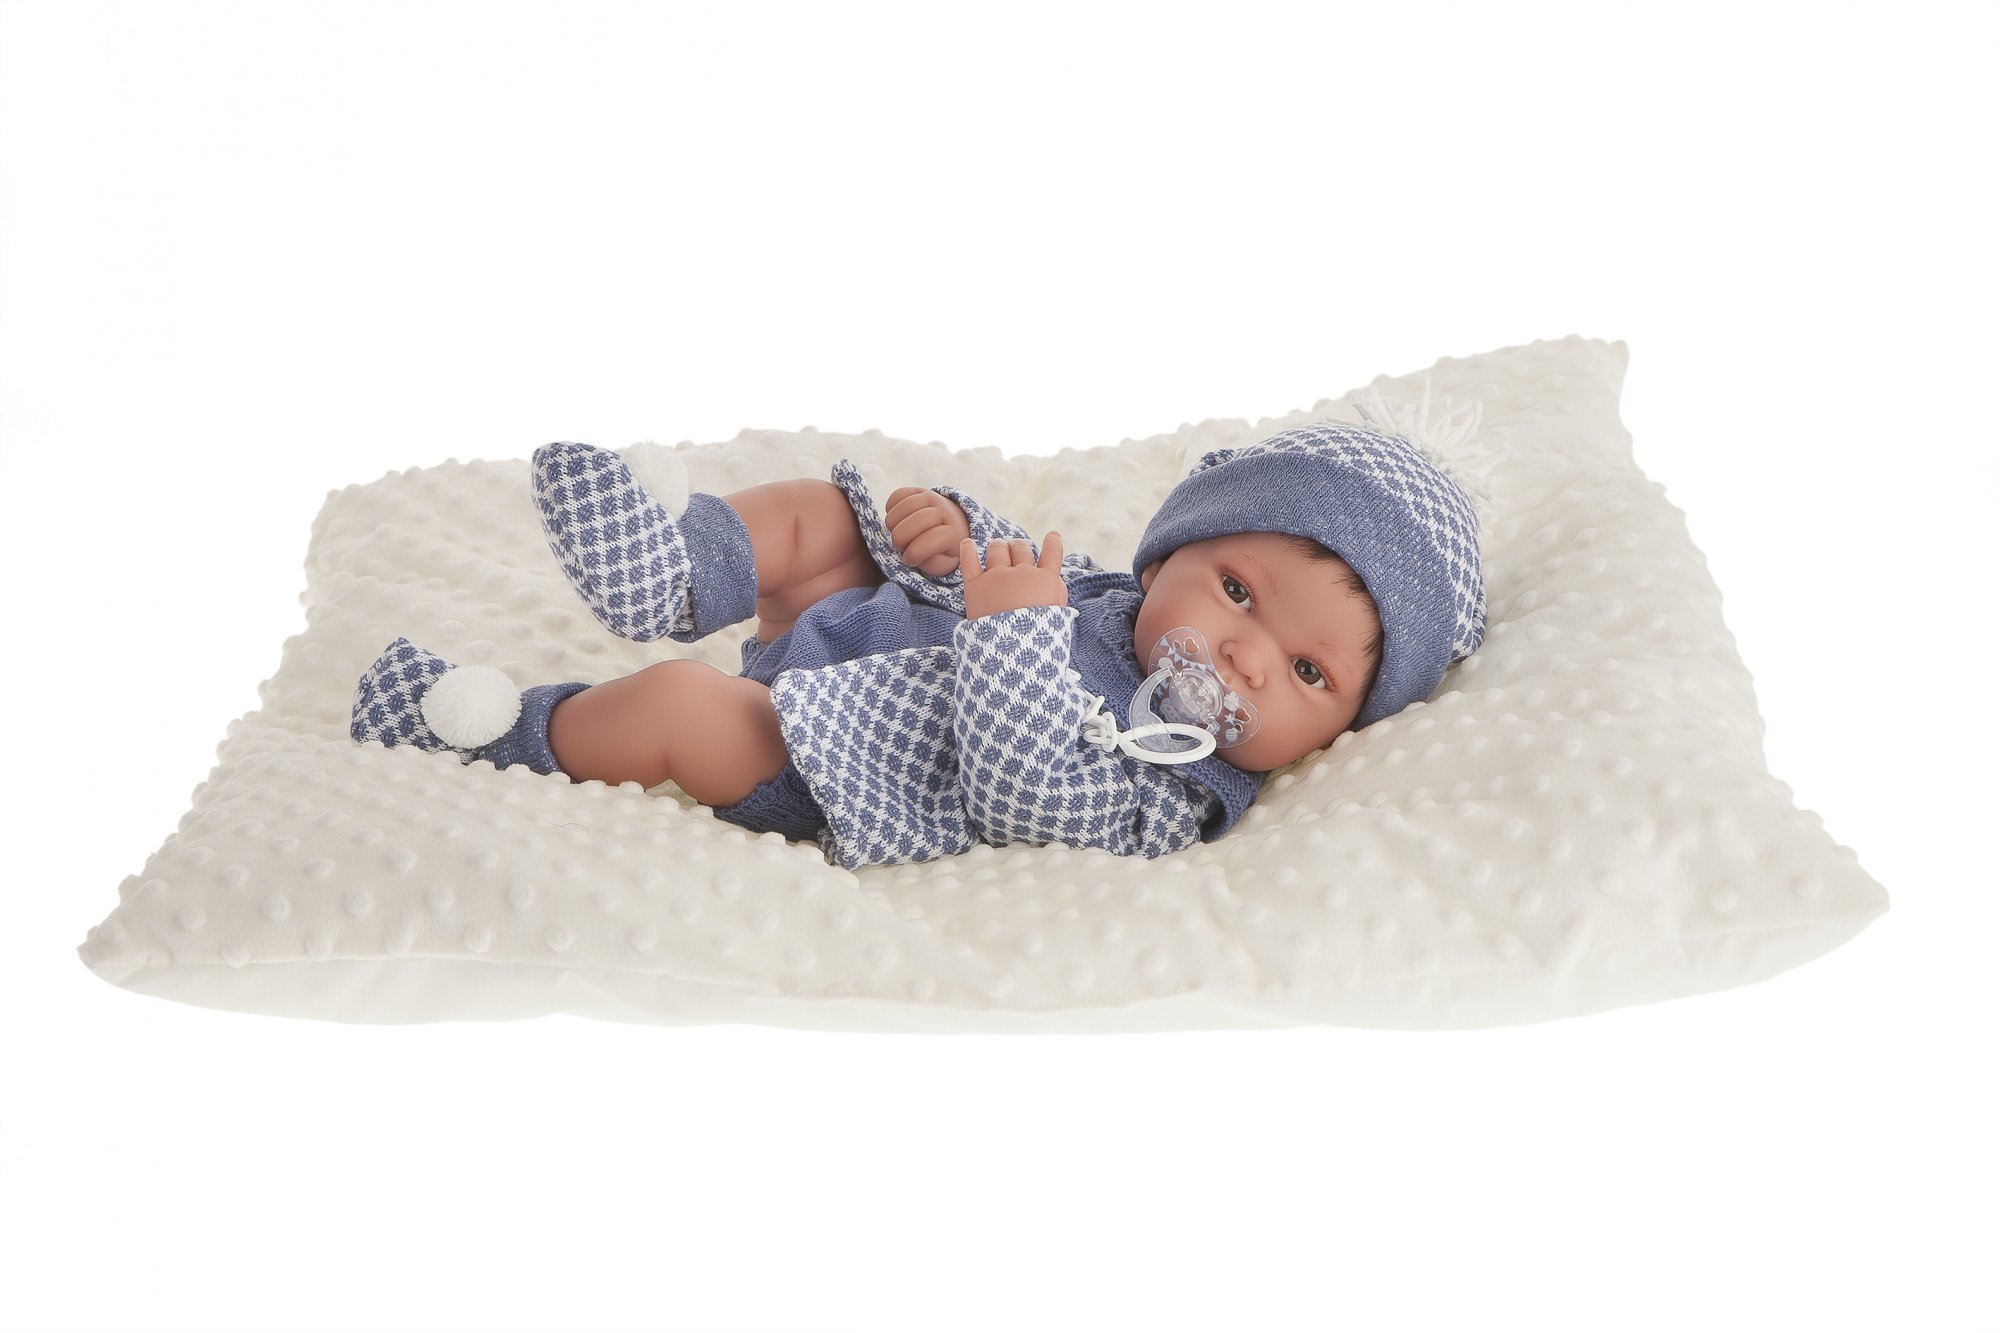 Levně Antonio Juan 5035 PIPO - realistická panenka miminko s celovinylovým tělem - 42 cm